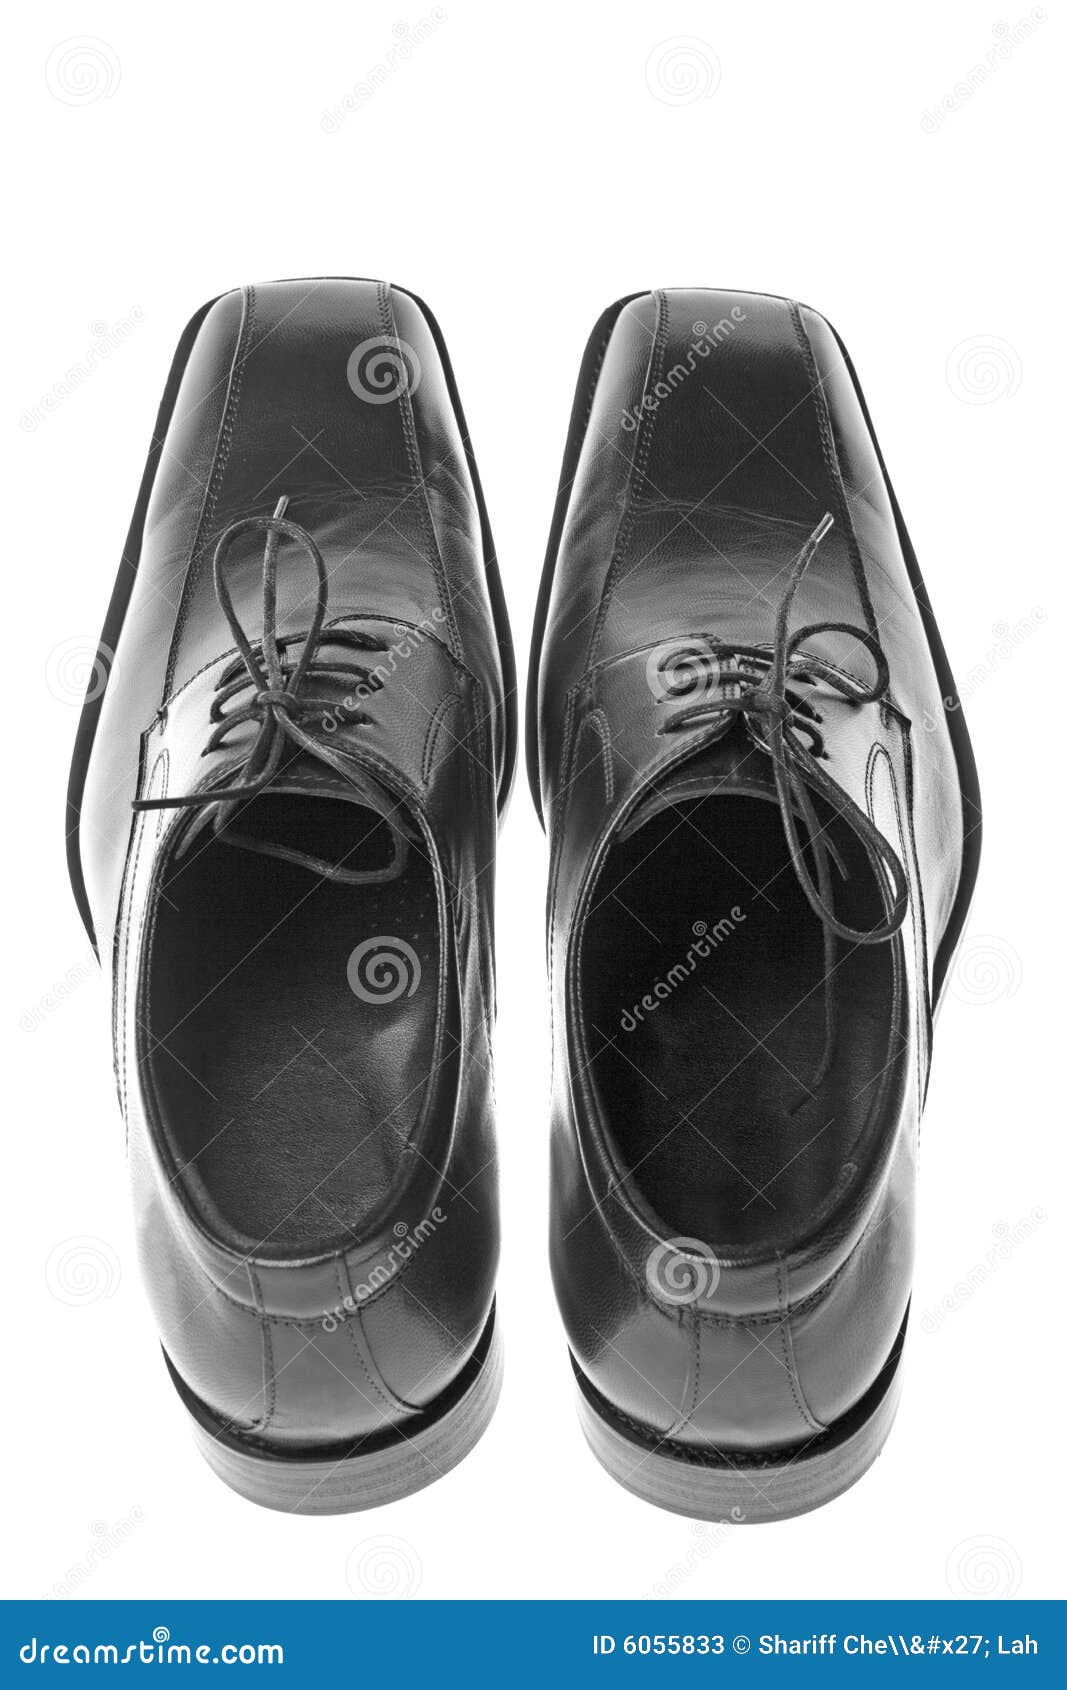 Men s Black Shoes stock image. Image of fashionable, product - 6055833